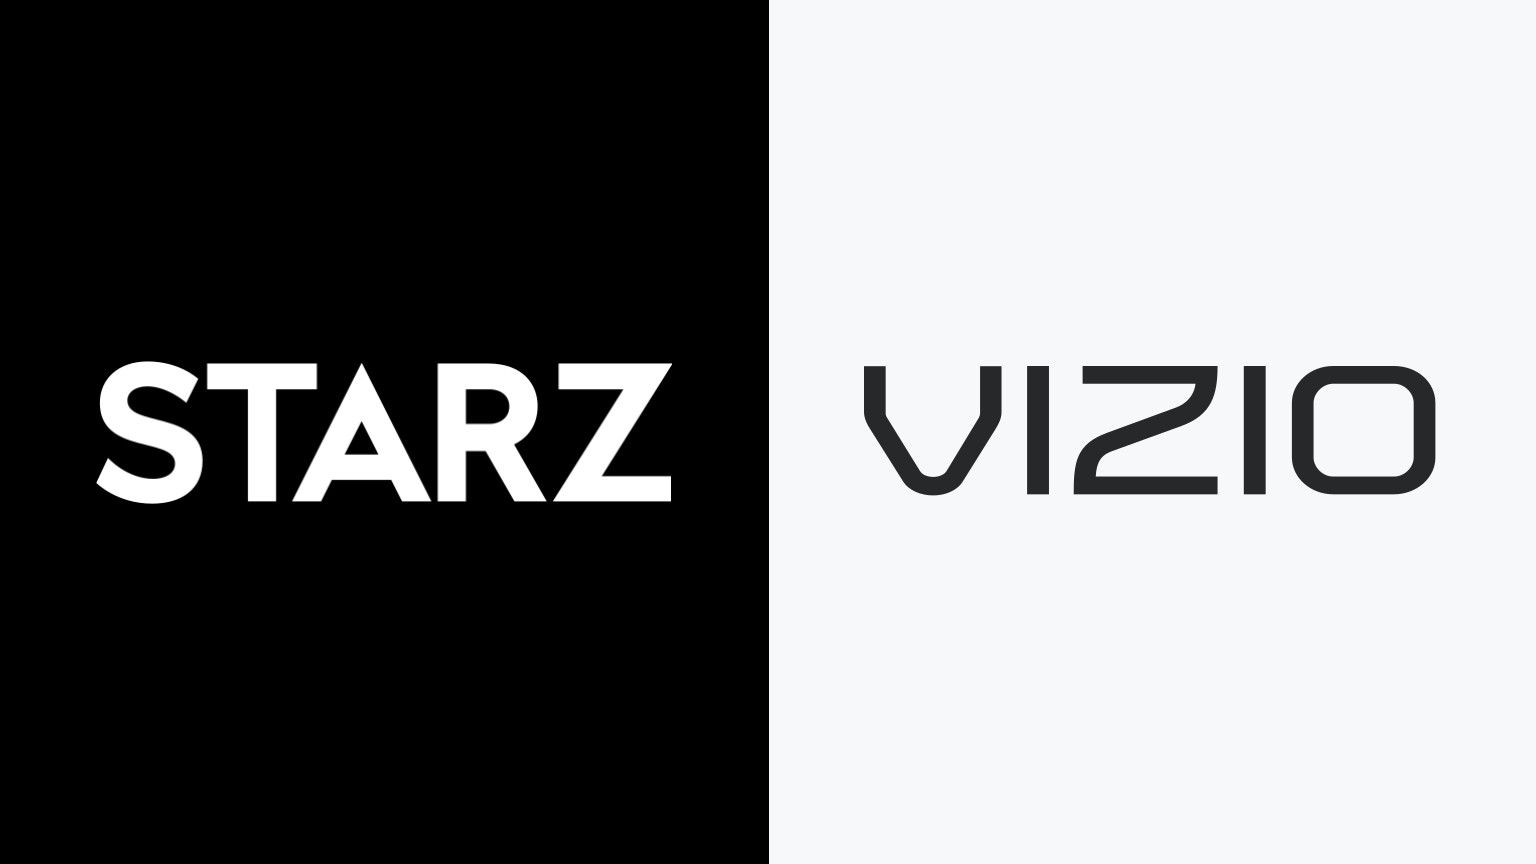 How To Install Starz App On Vizio Smart TV